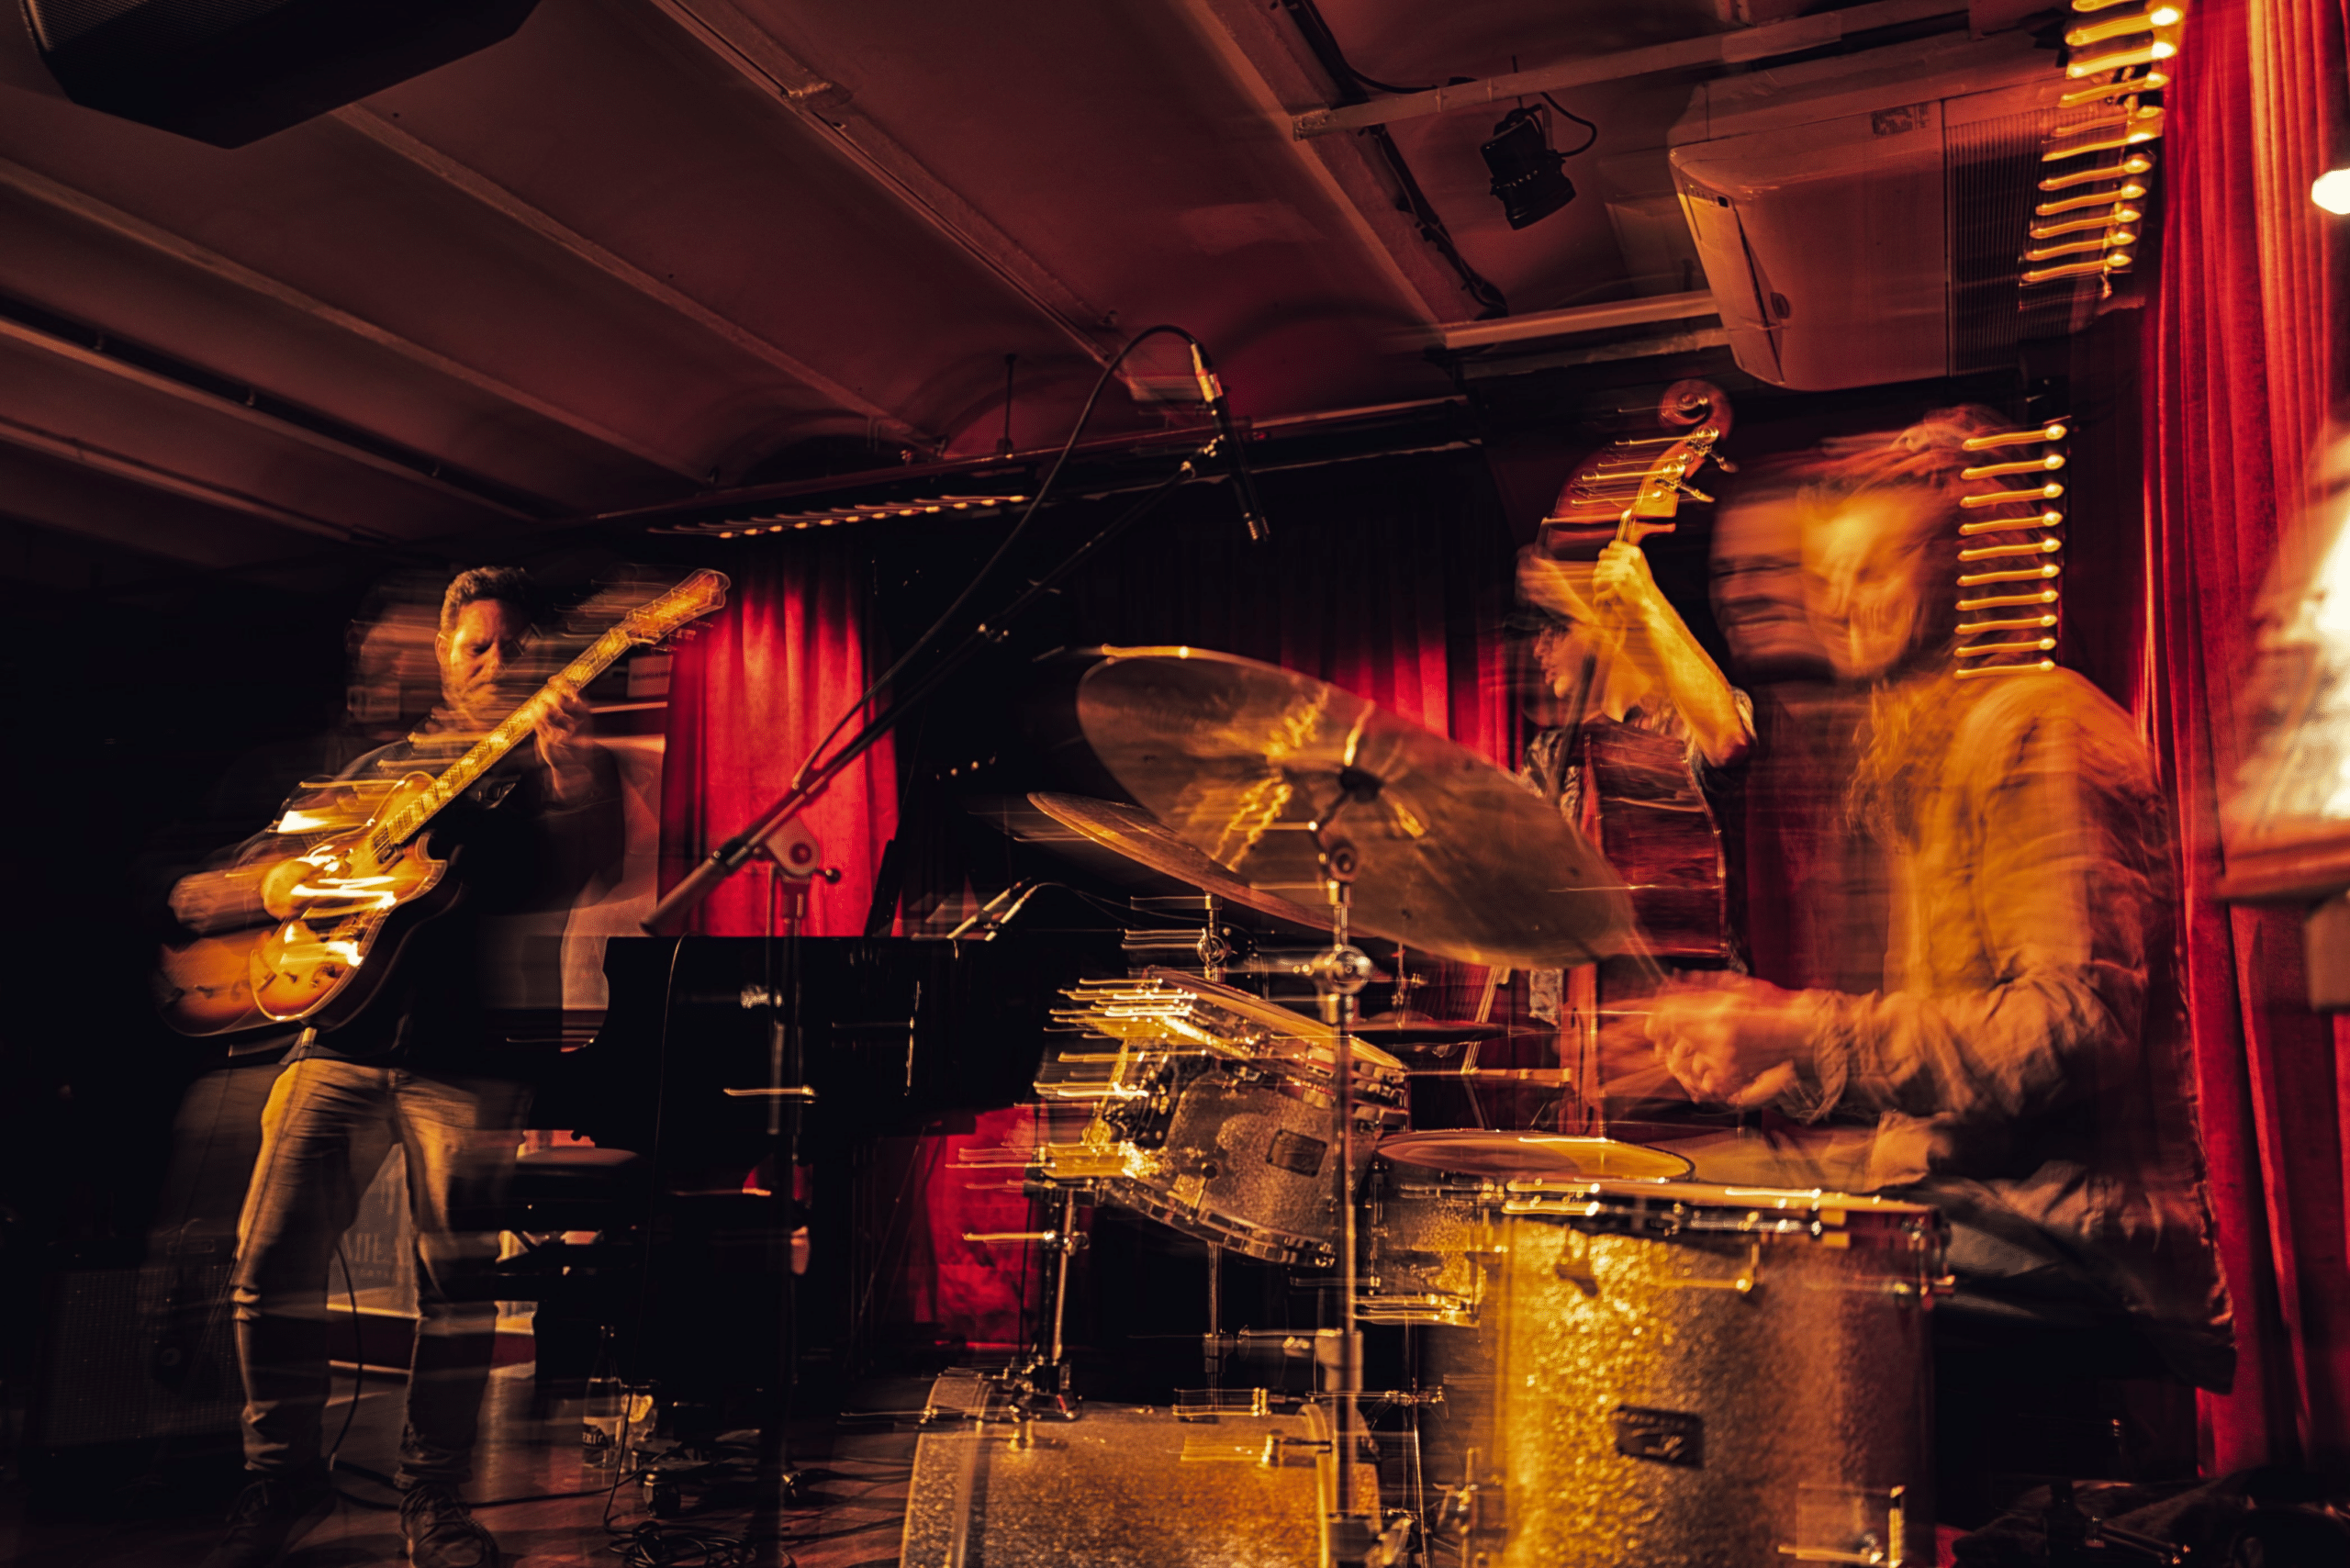 Milano Jazz Club, a soulful music venue in Barcelona, Eran Har Even Trio